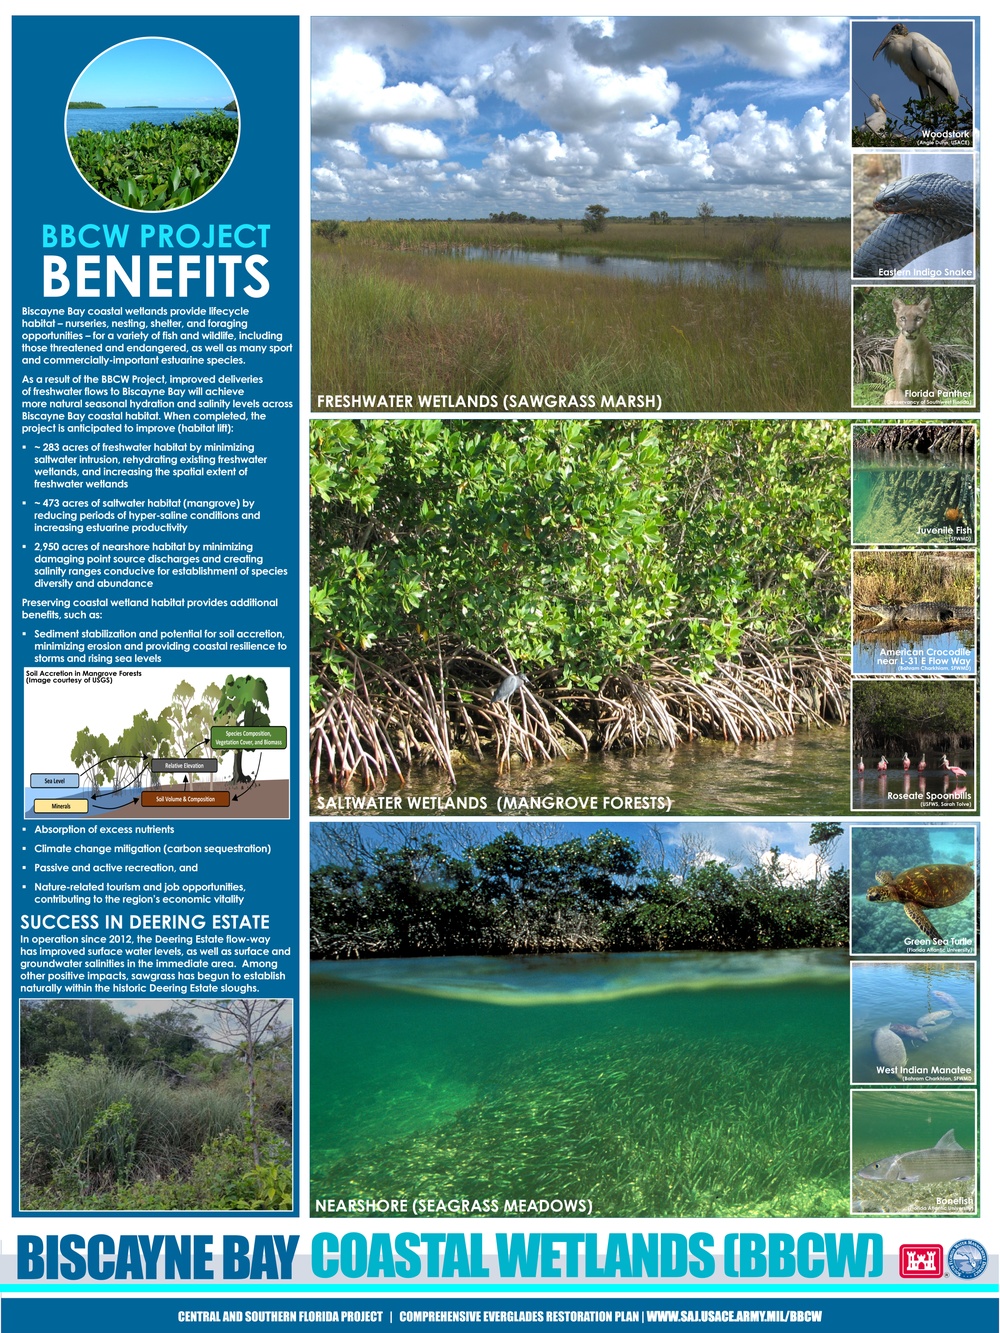 Biscayne Bay Coastal Wetlands Project| Benefits Poster